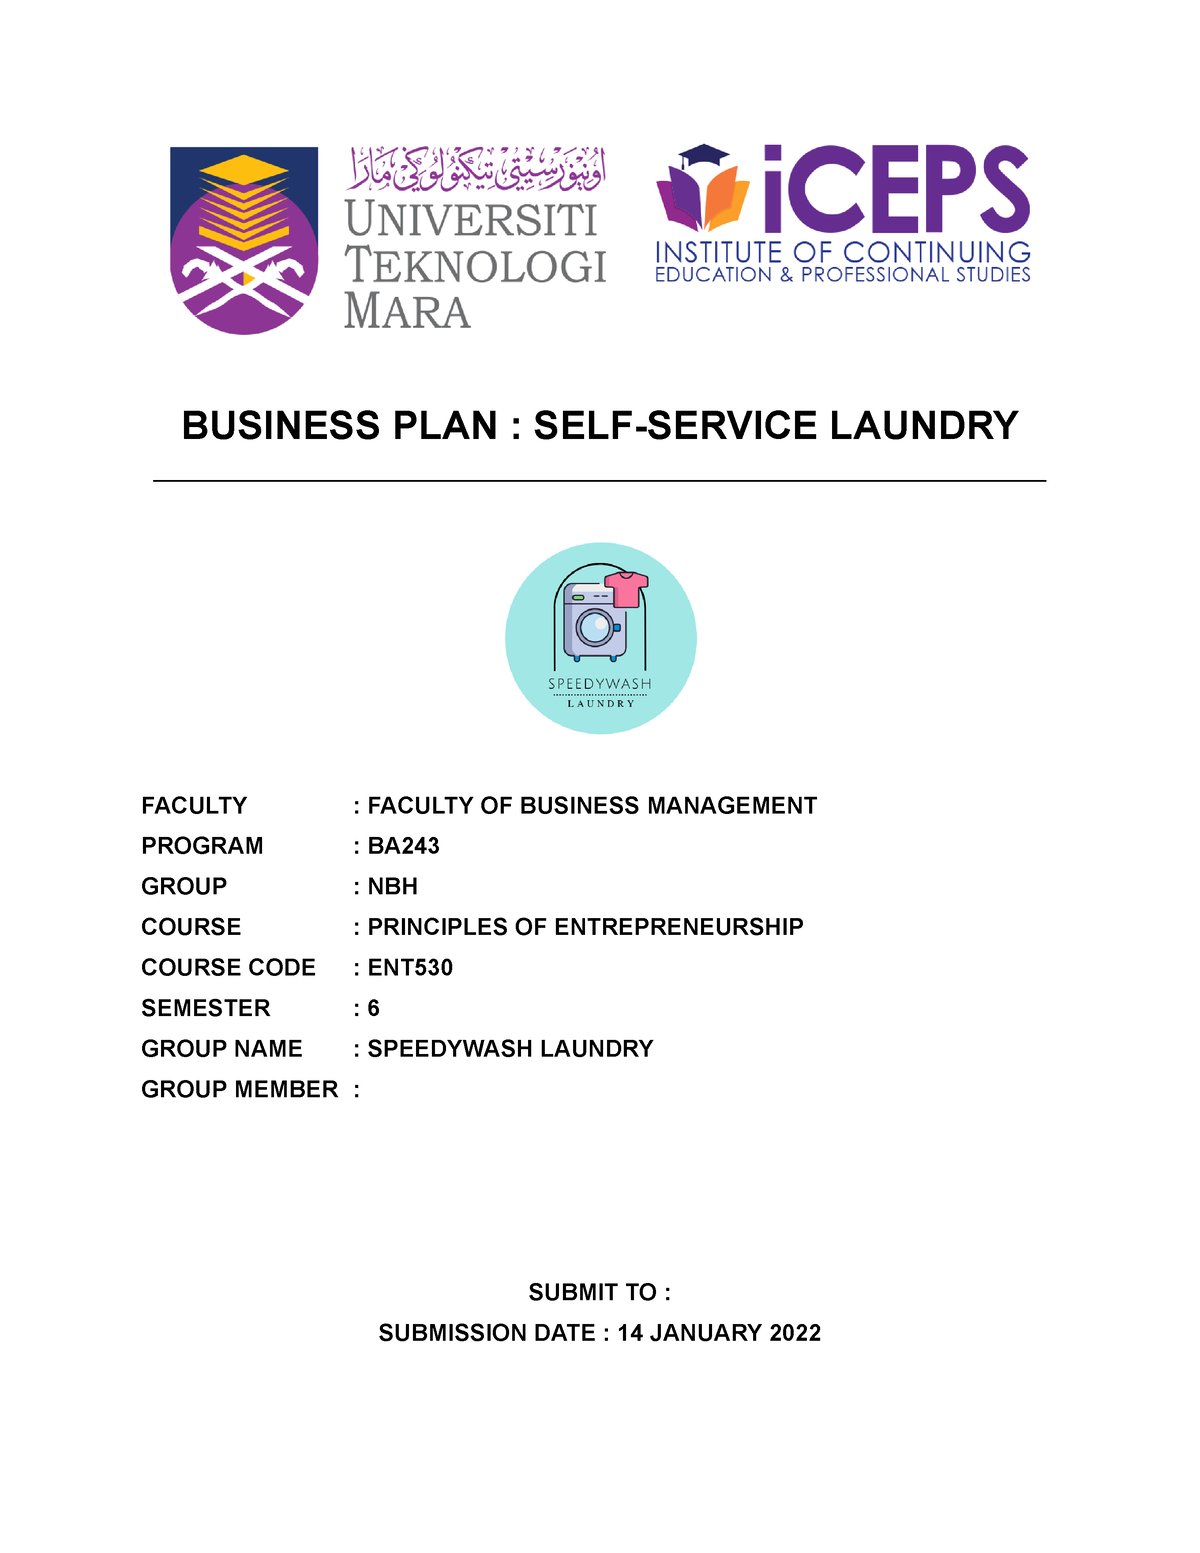 laundry business plan pdf philippines